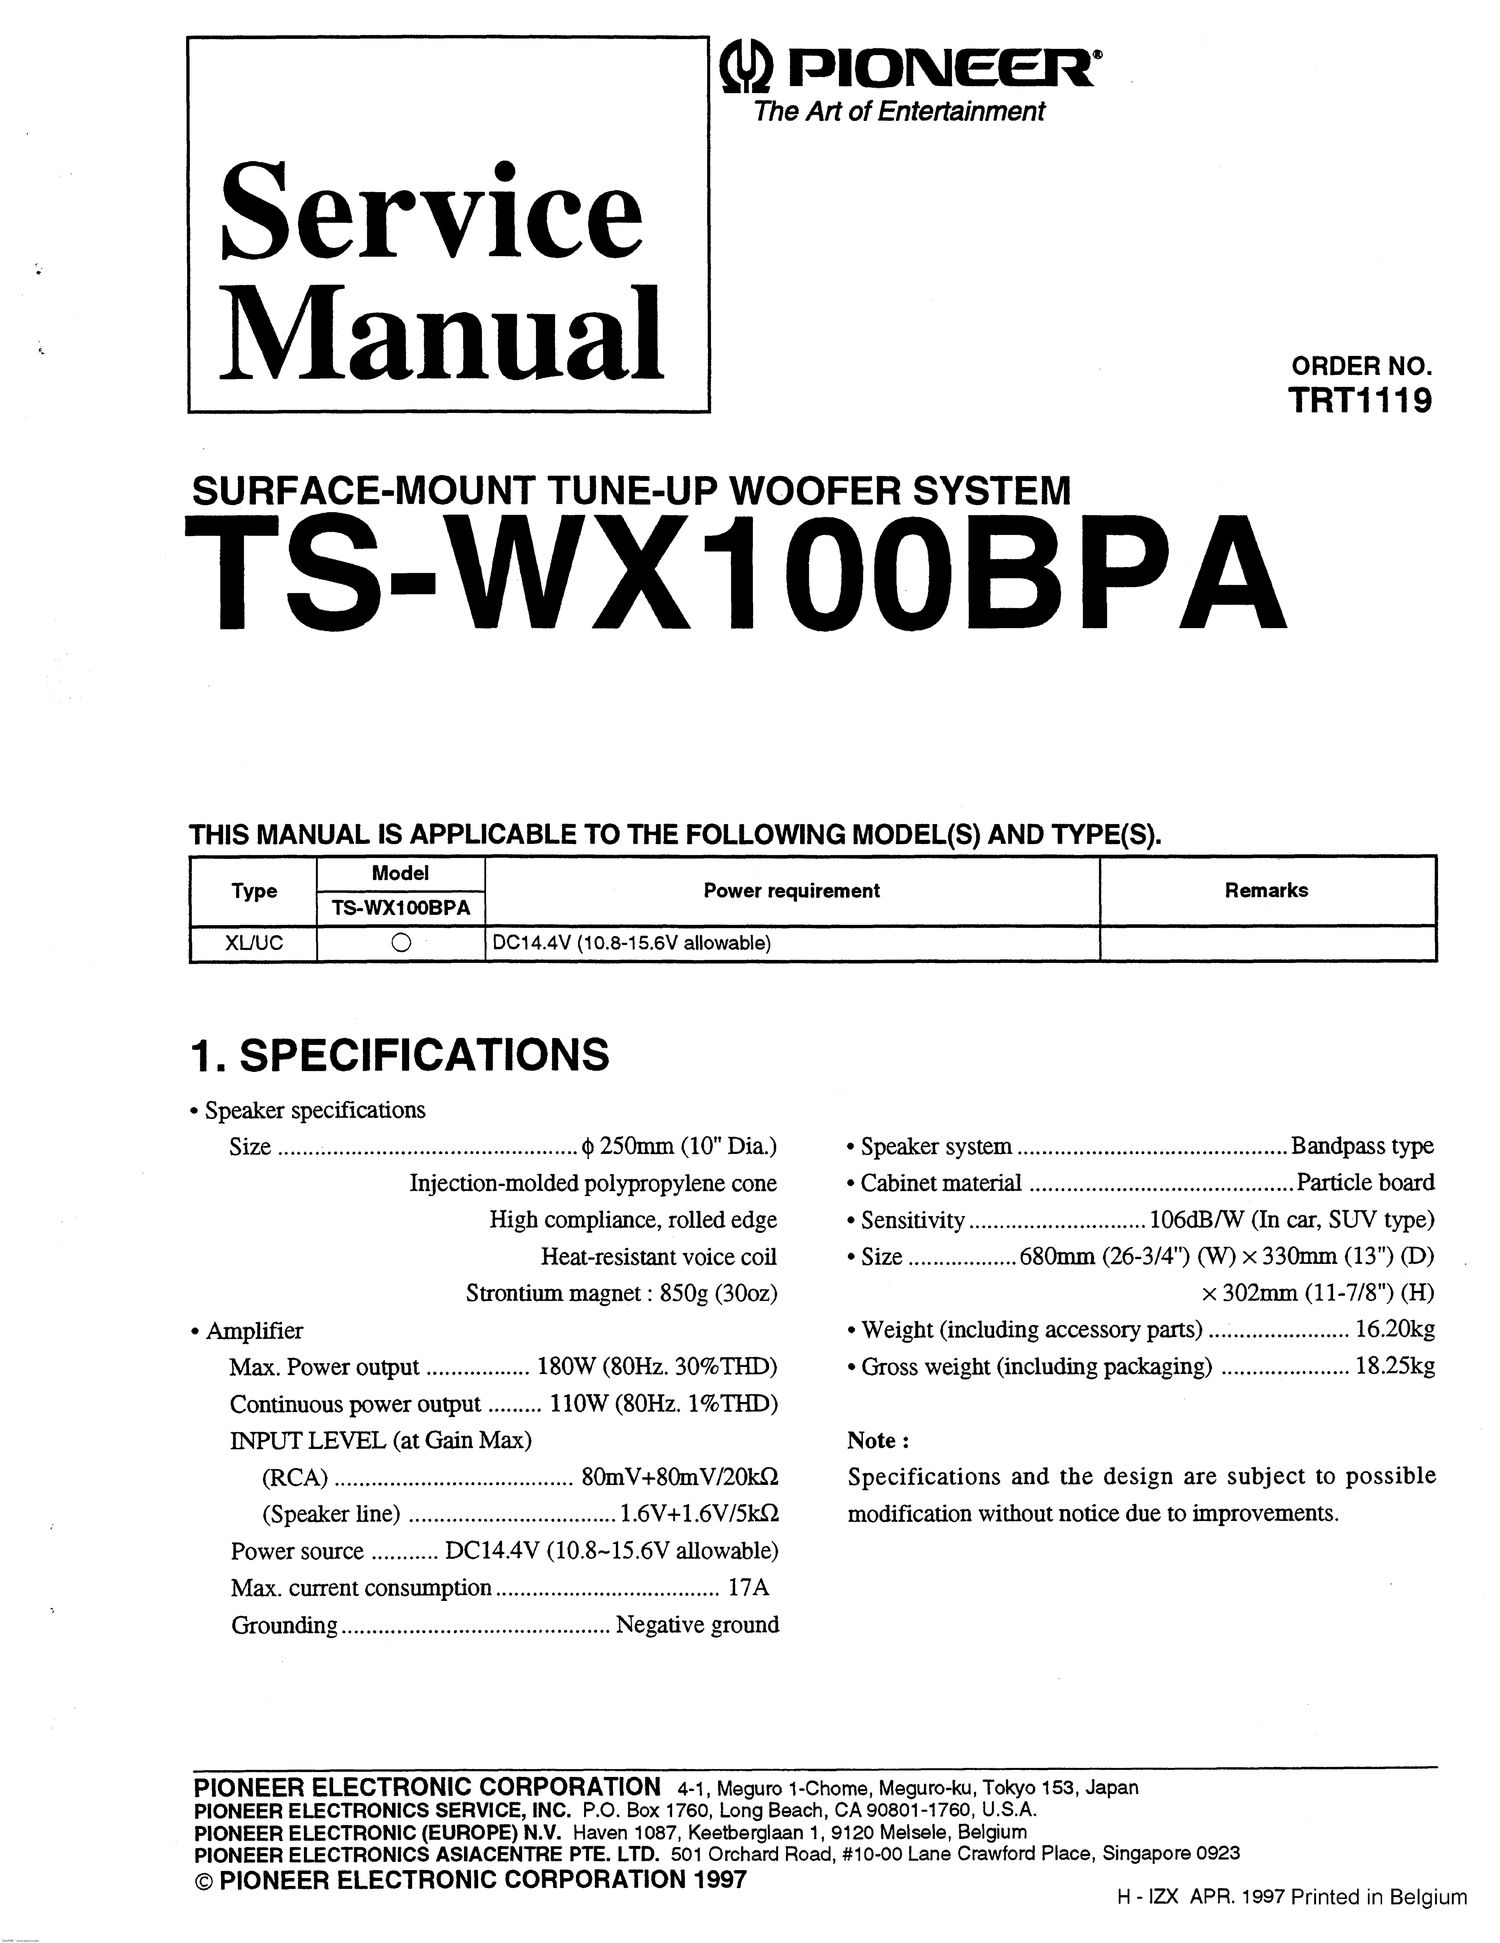 pioneer tswx 100 bpa service manual